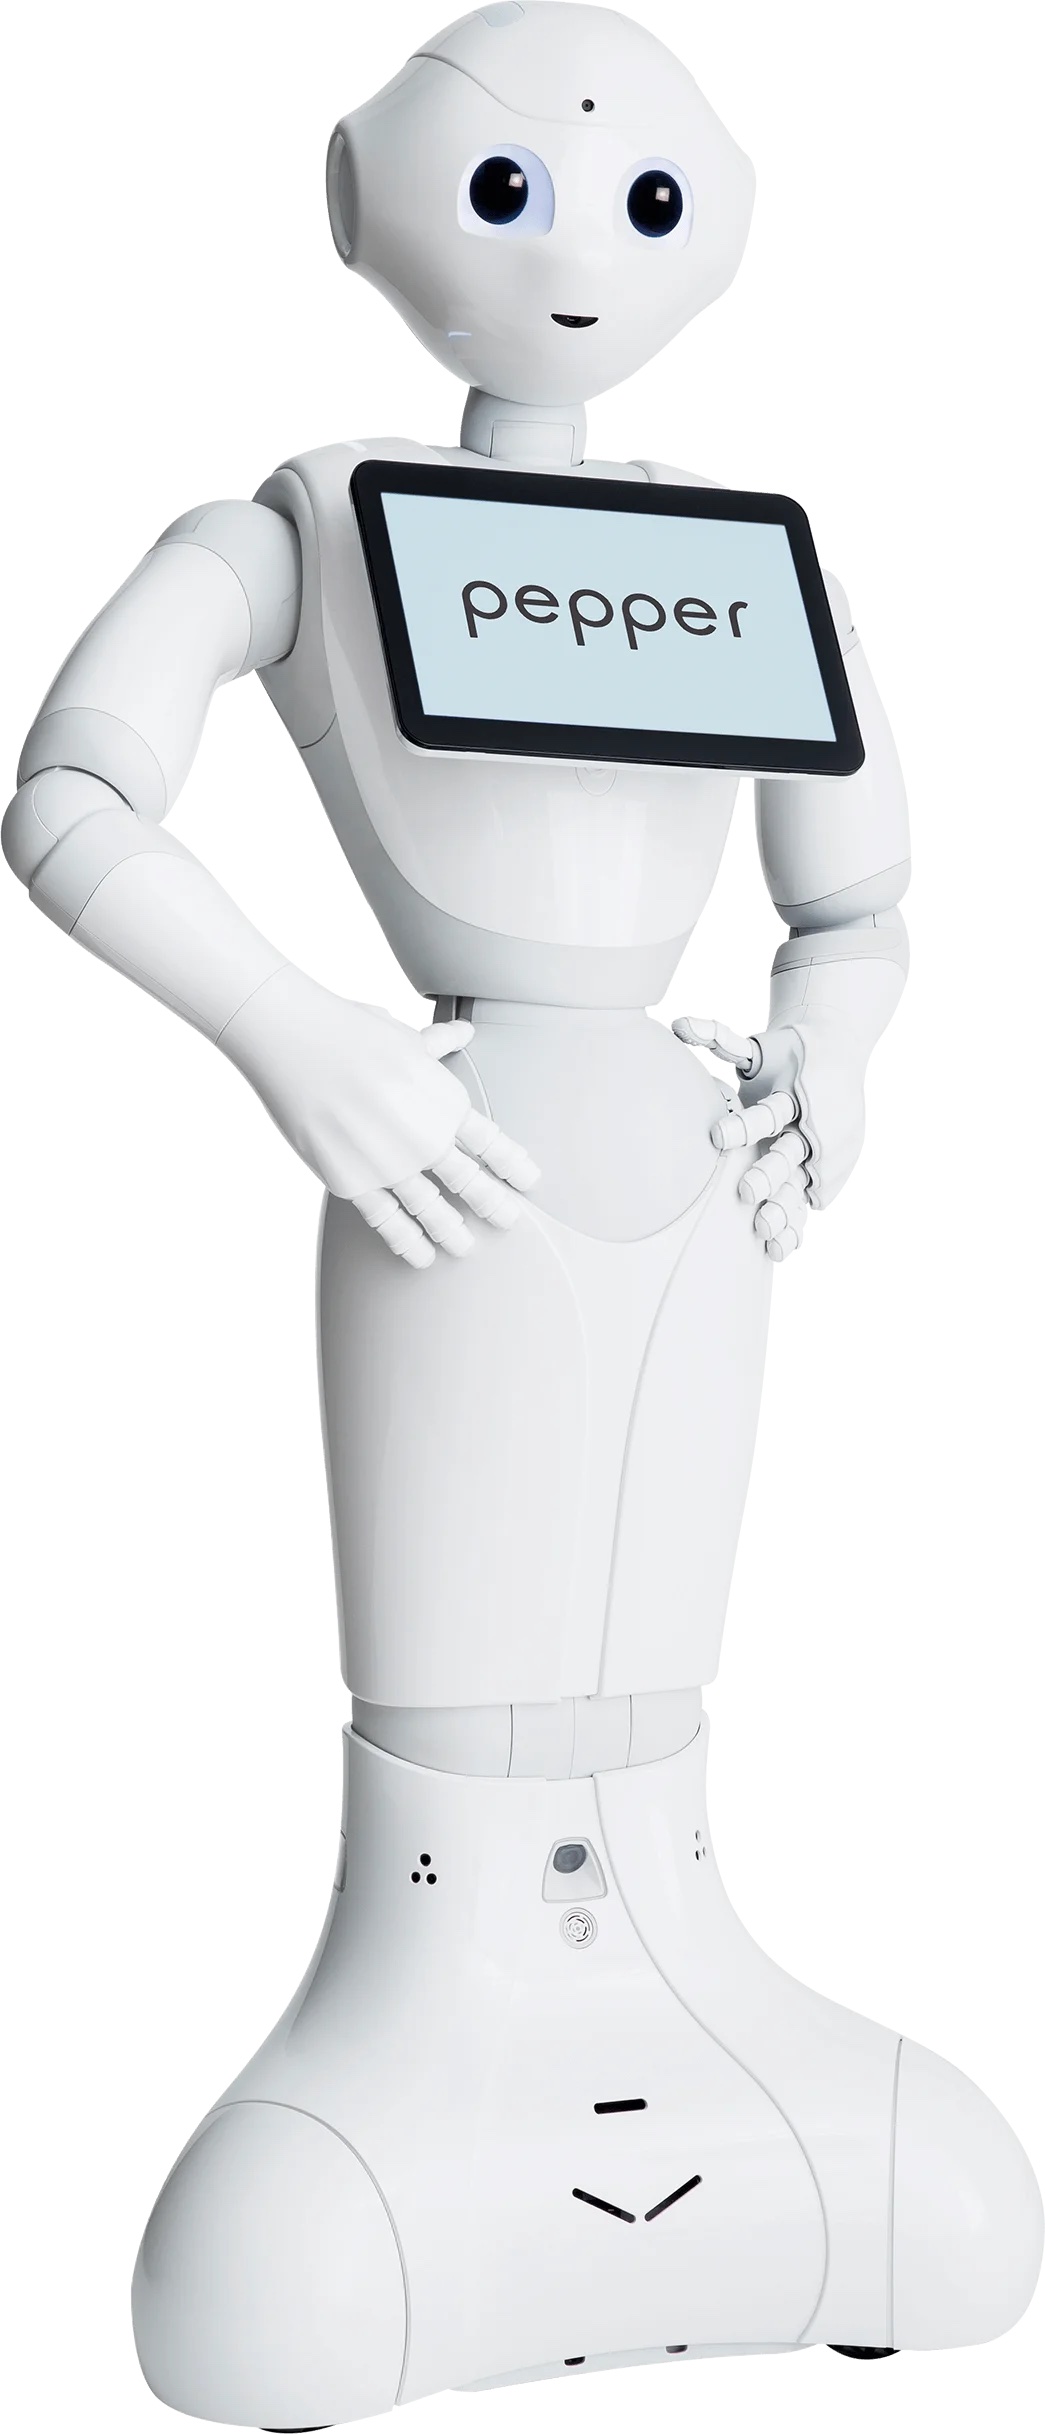 Introducing Saint Joseph's Humanoid Robot | Saint Joseph's University